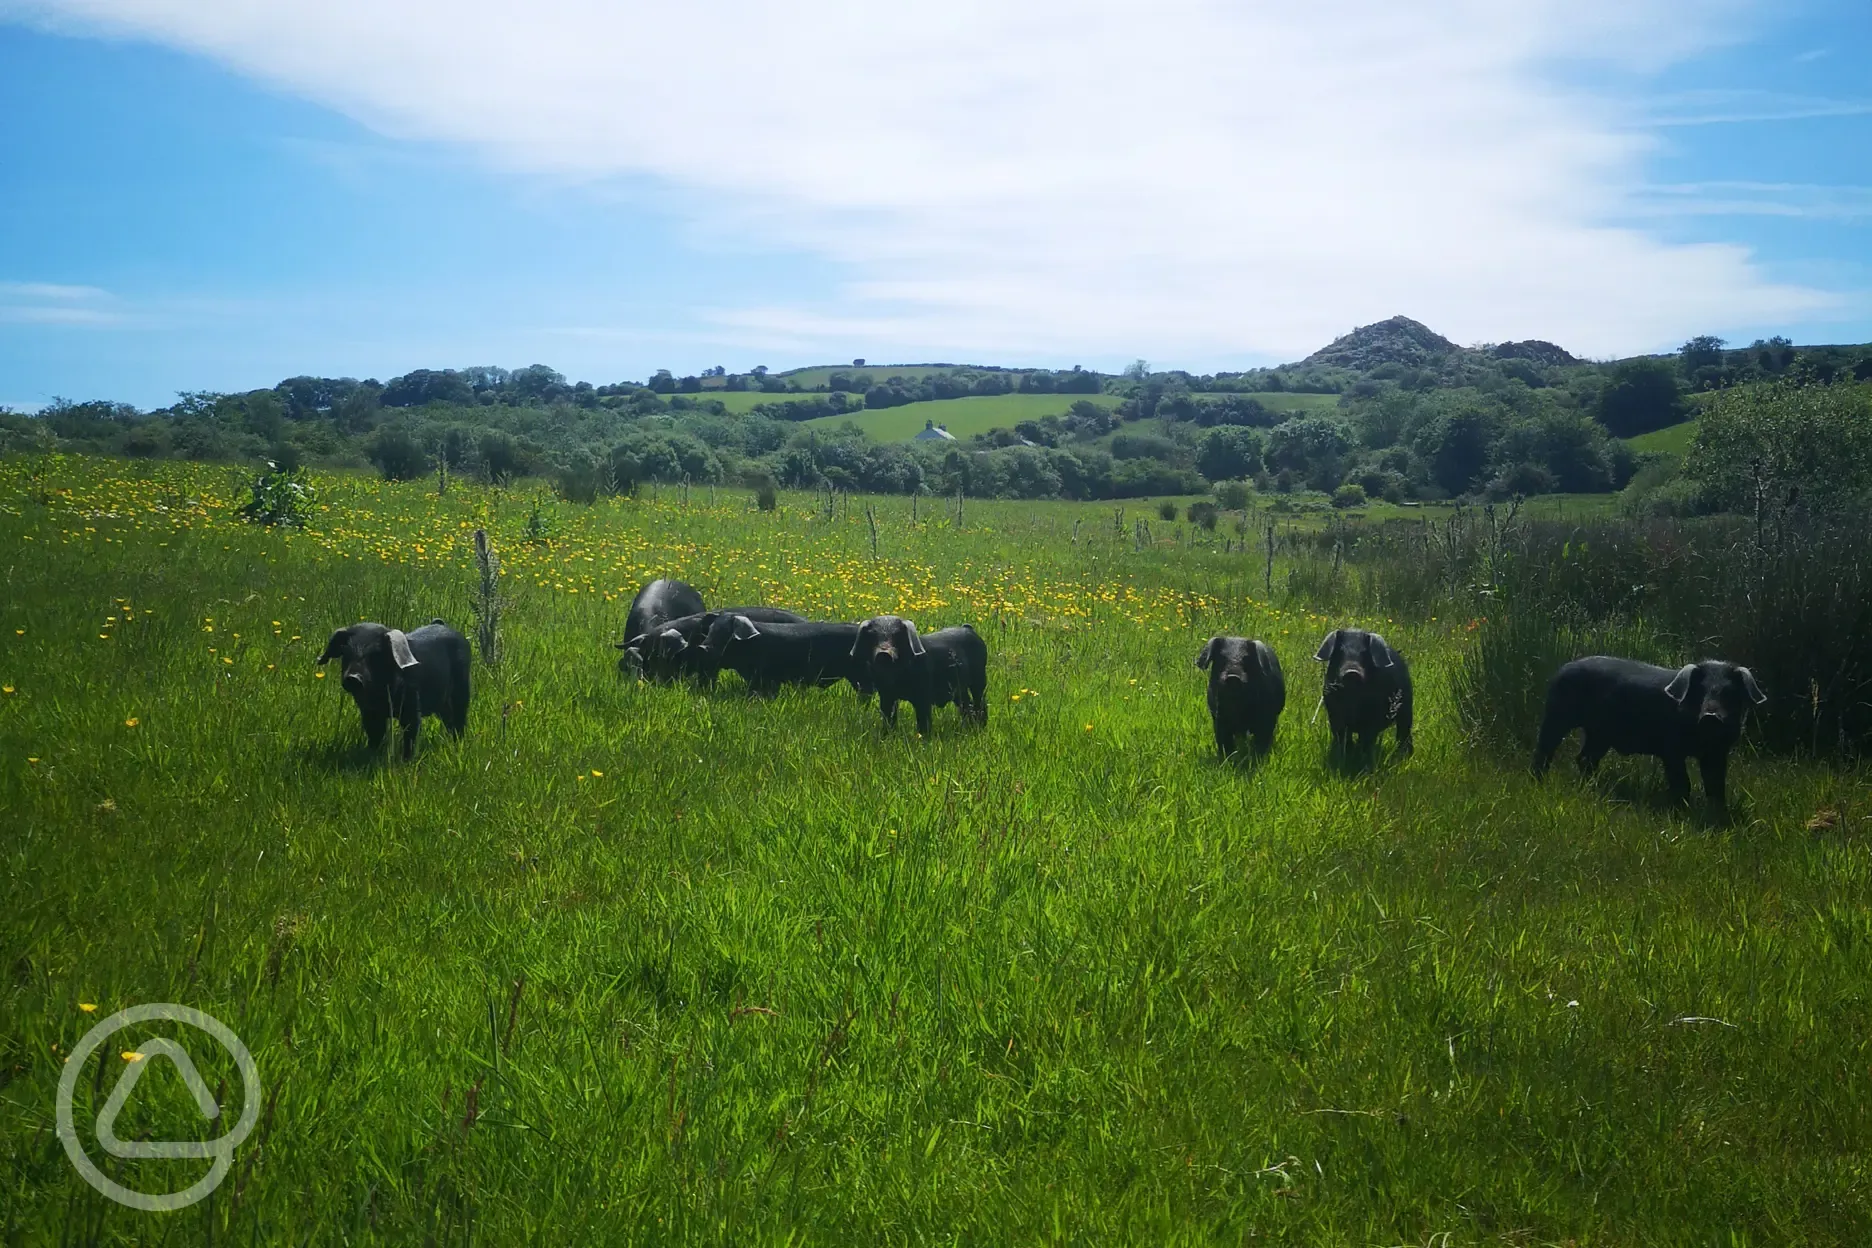 The Cornish Black Pig residents!